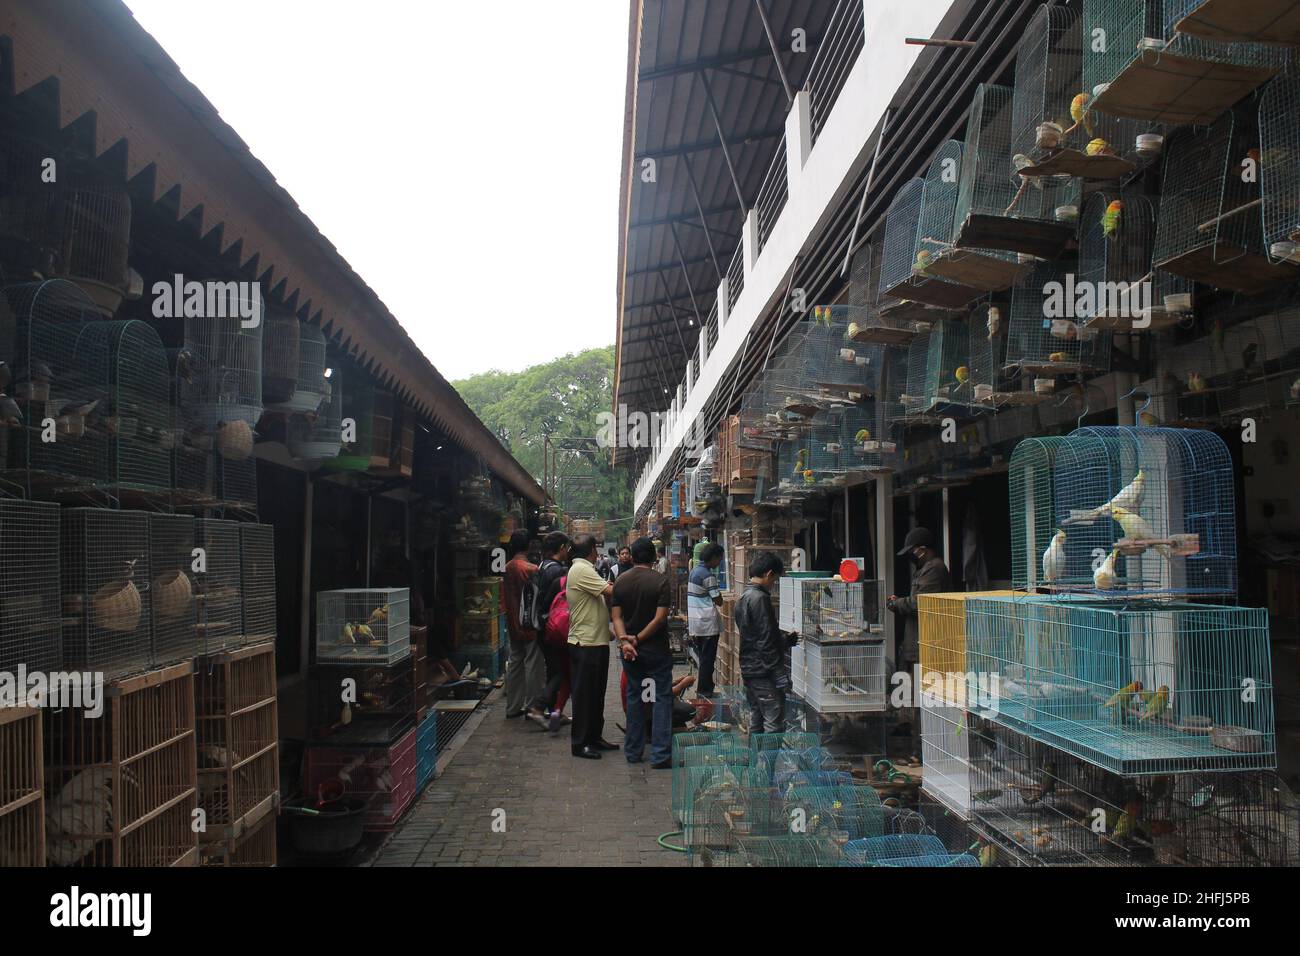 Surakarta, Indonesia. January 21, 2014. The atmosphere of the animal market in the city of Surakarta. Stock Photo